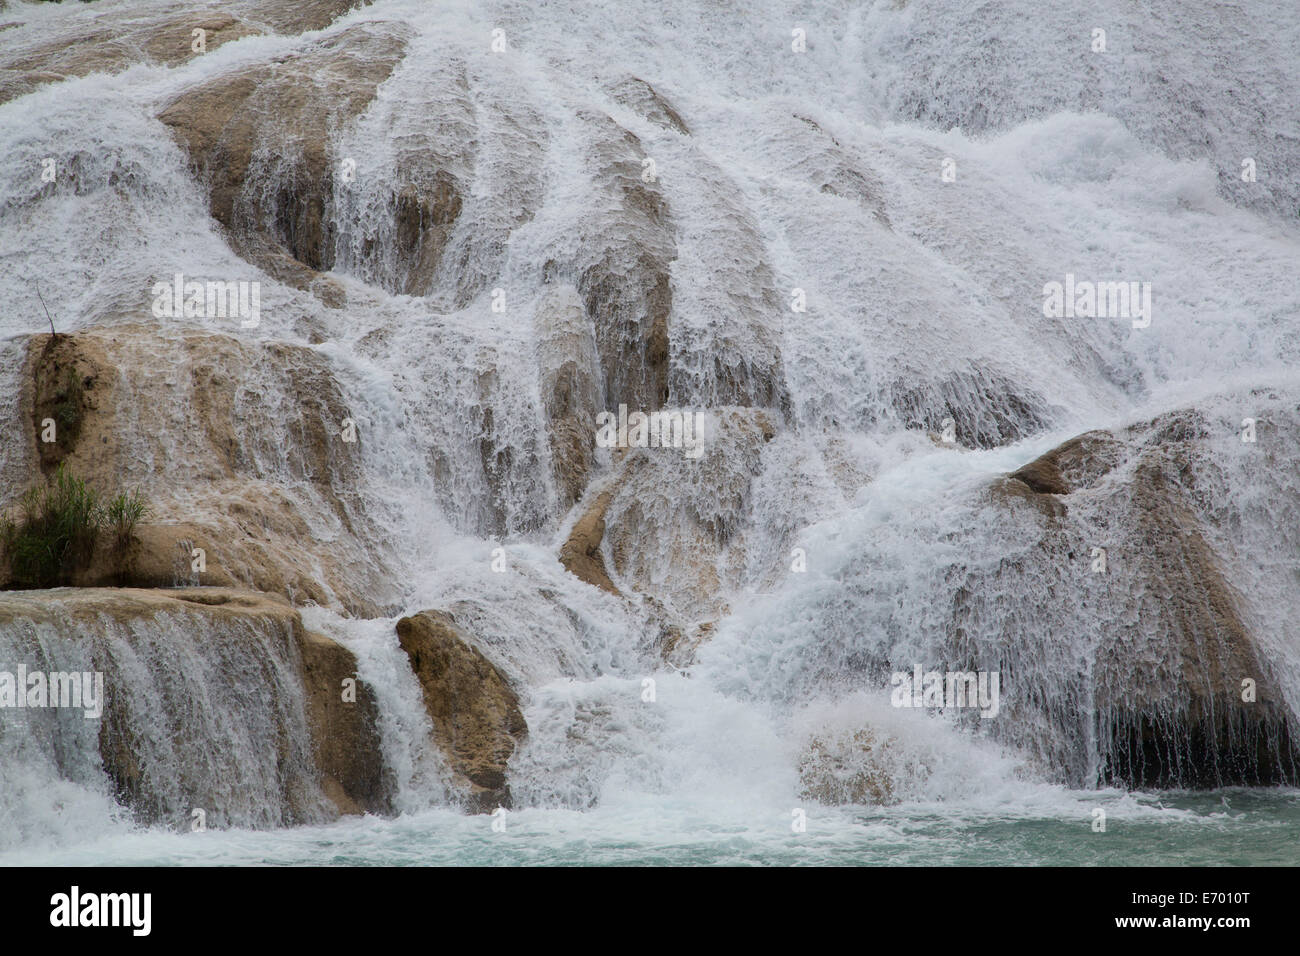 Mexico, Chiapas, near Palenque, Rio Tulija, Parque Nacional de Agua Azul, churning cascades Stock Photo